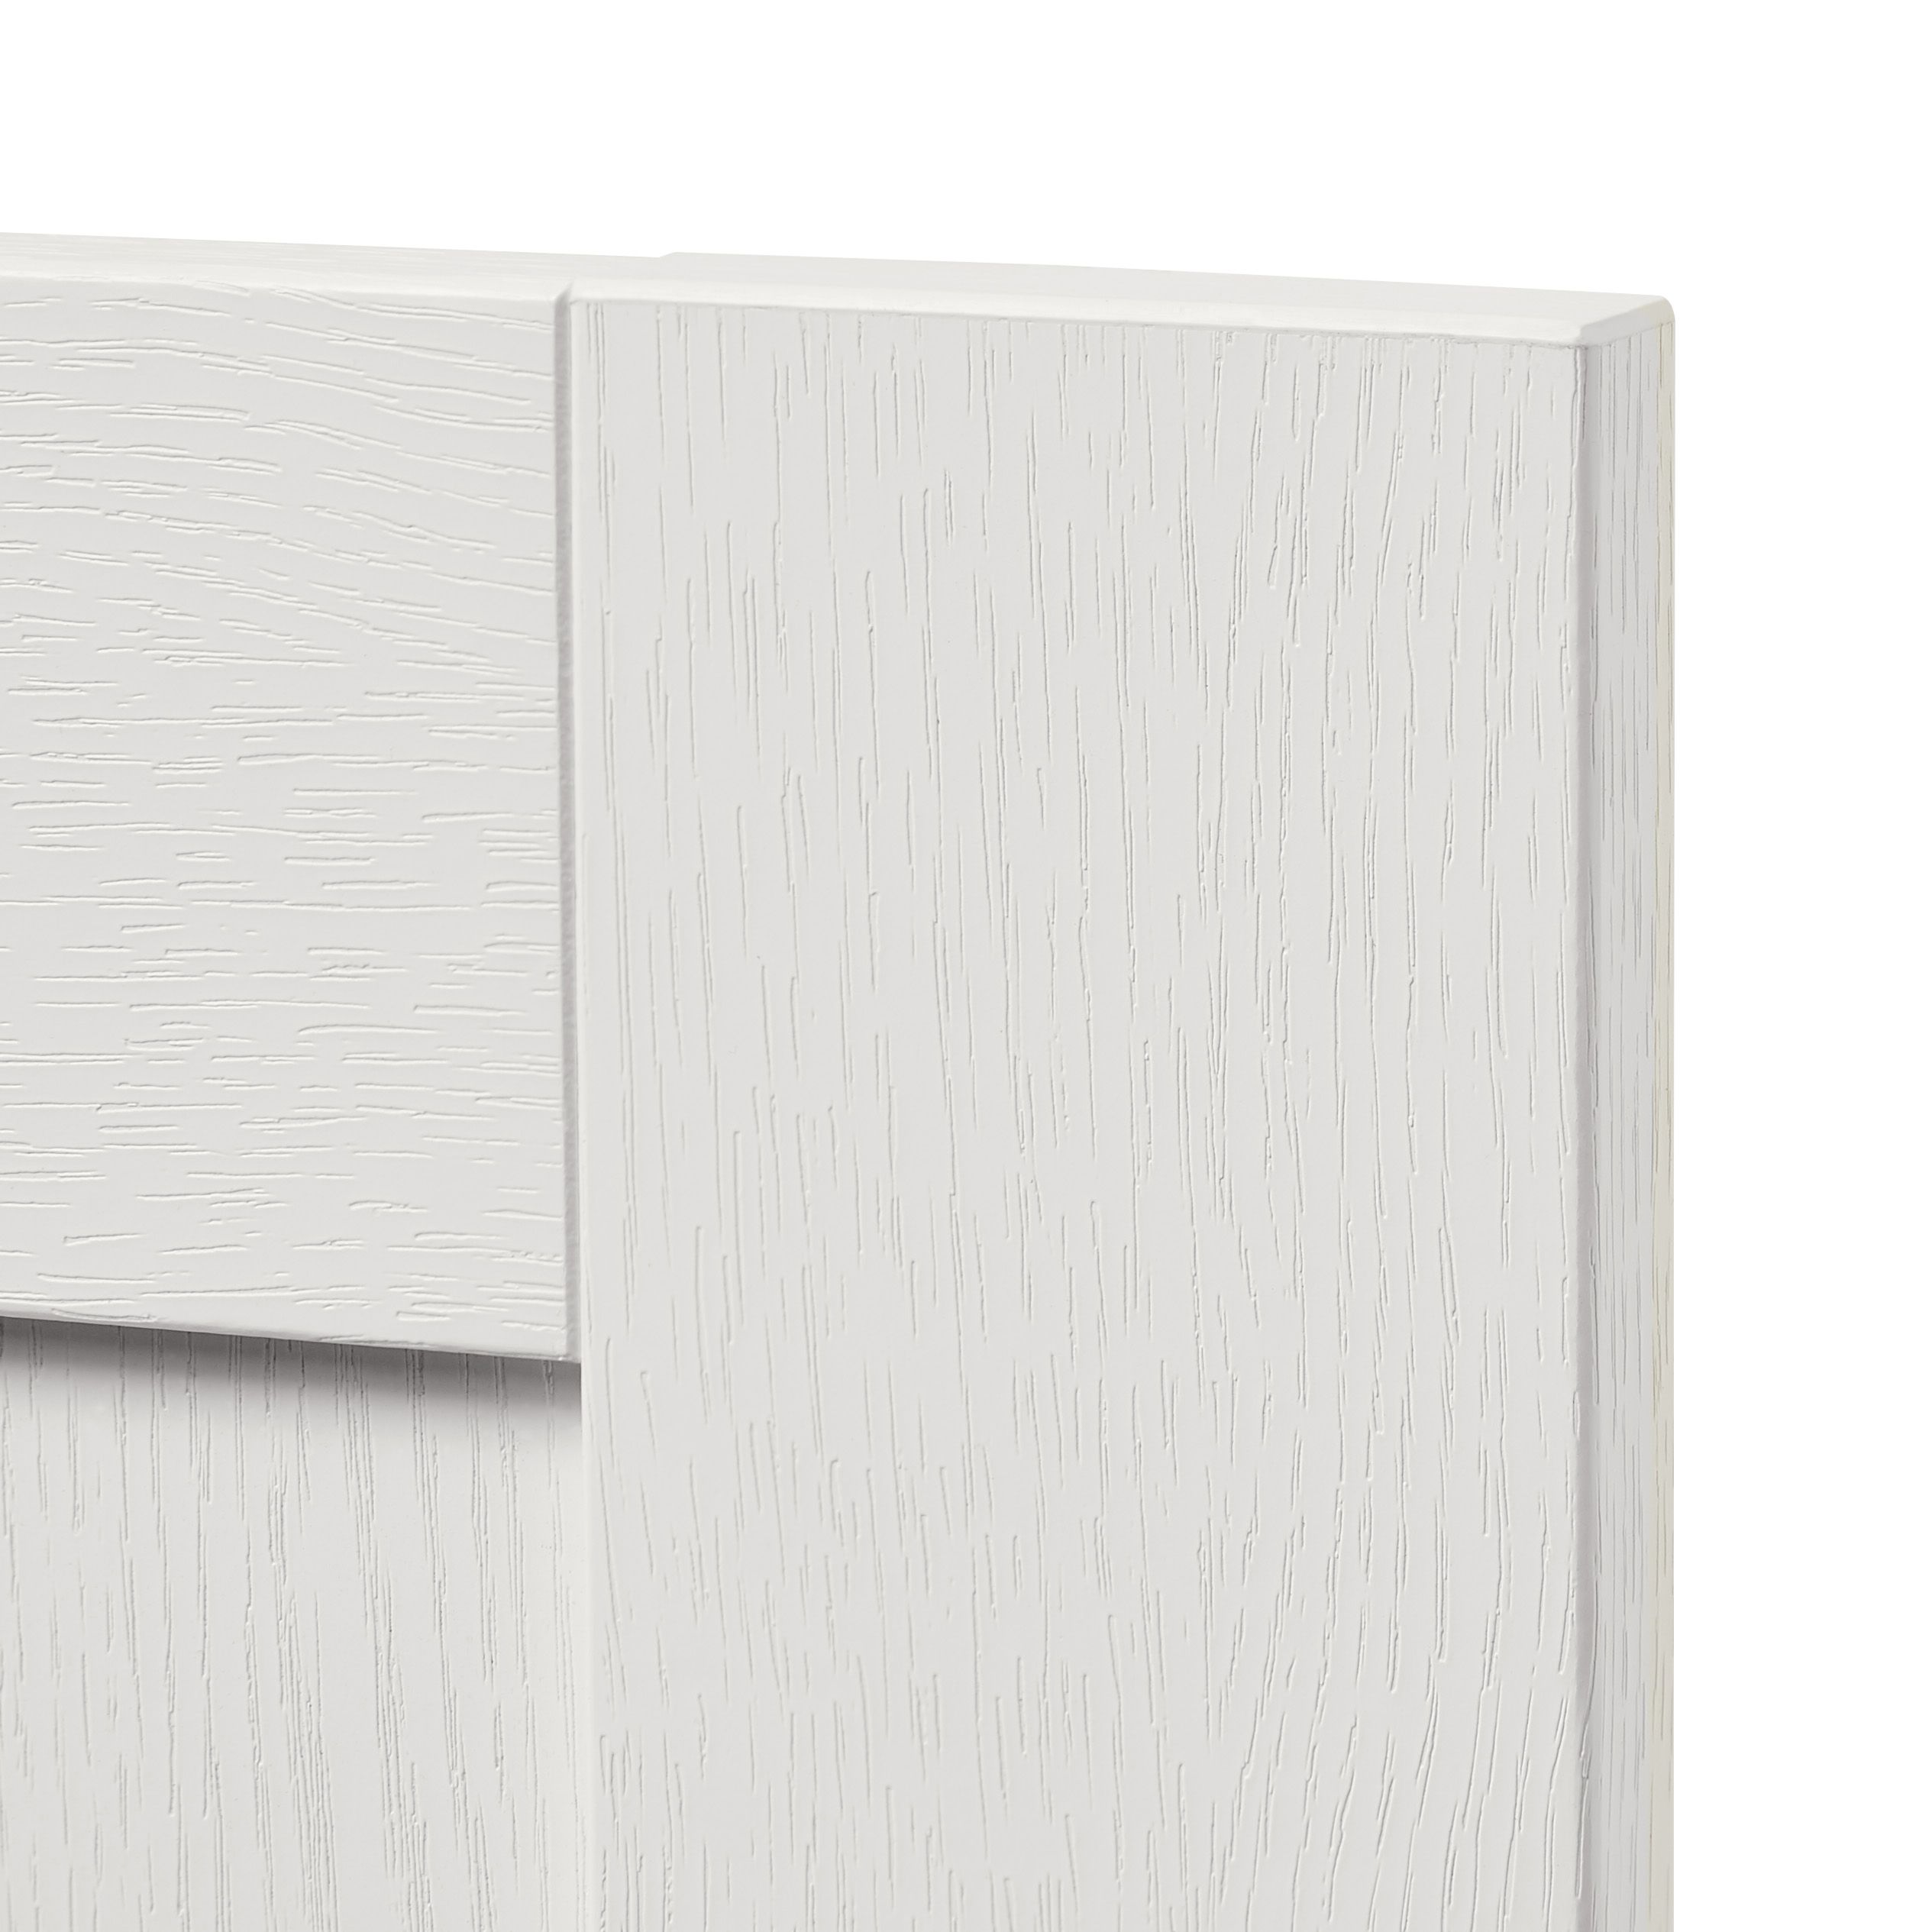 GoodHome Alpinia Matt ivory painted wood effect shaker Tall appliance Cabinet door (W)600mm (H)806mm (T)18mm